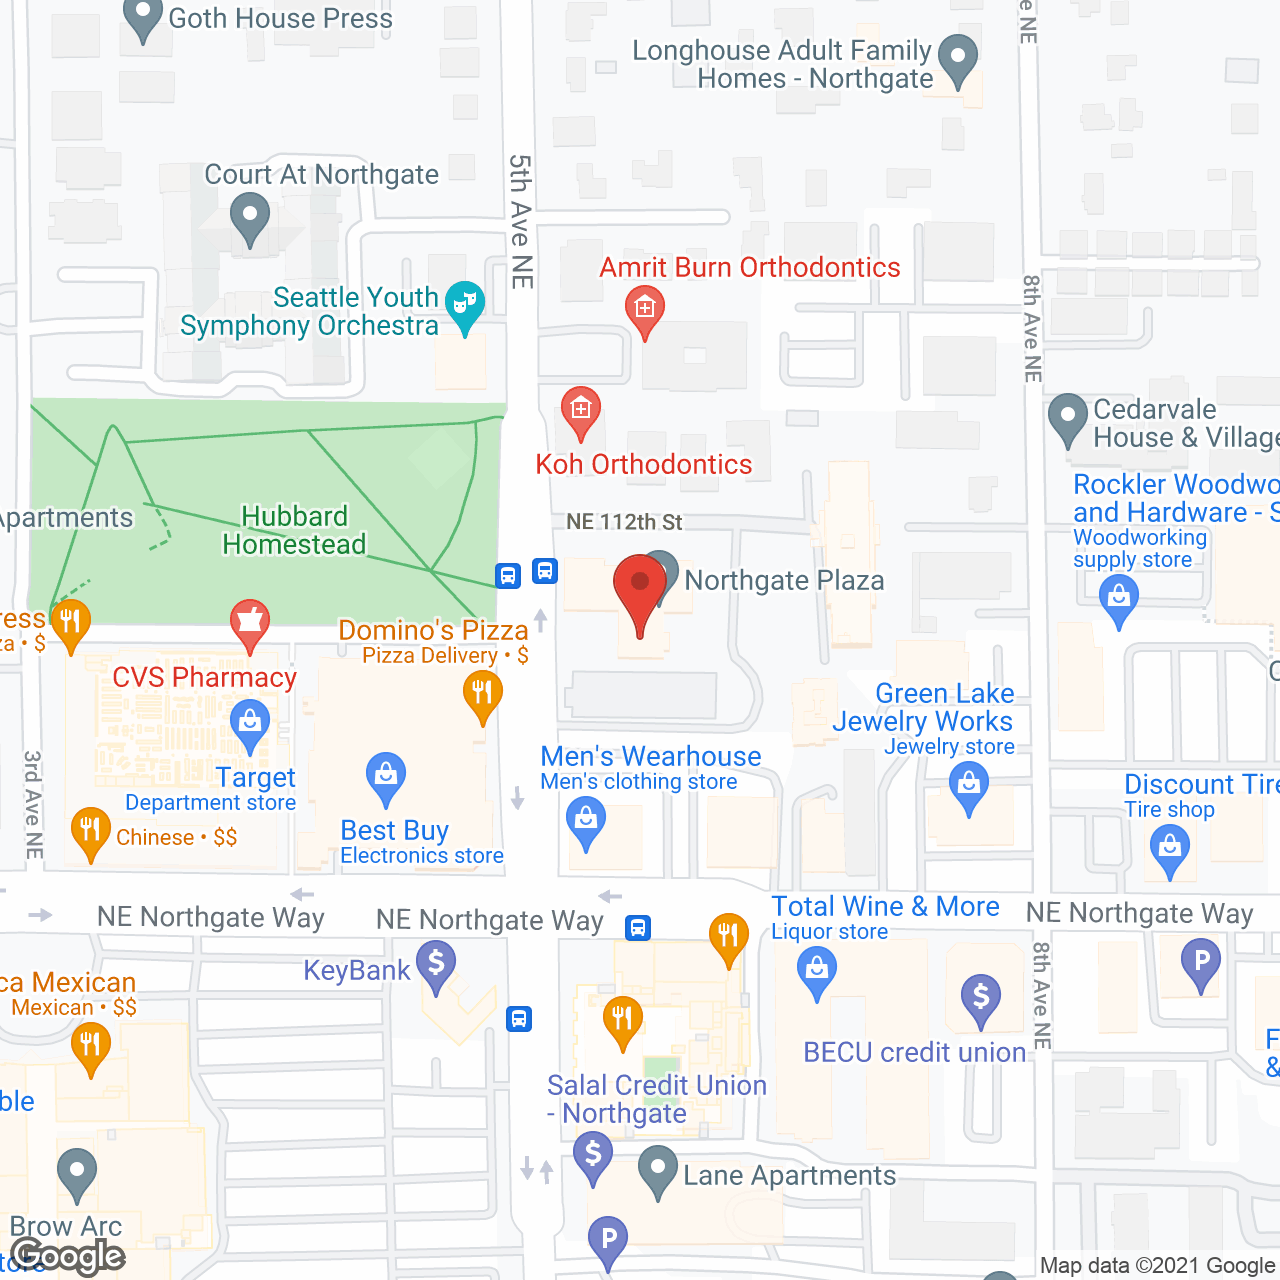 Northgate Plaza in google map